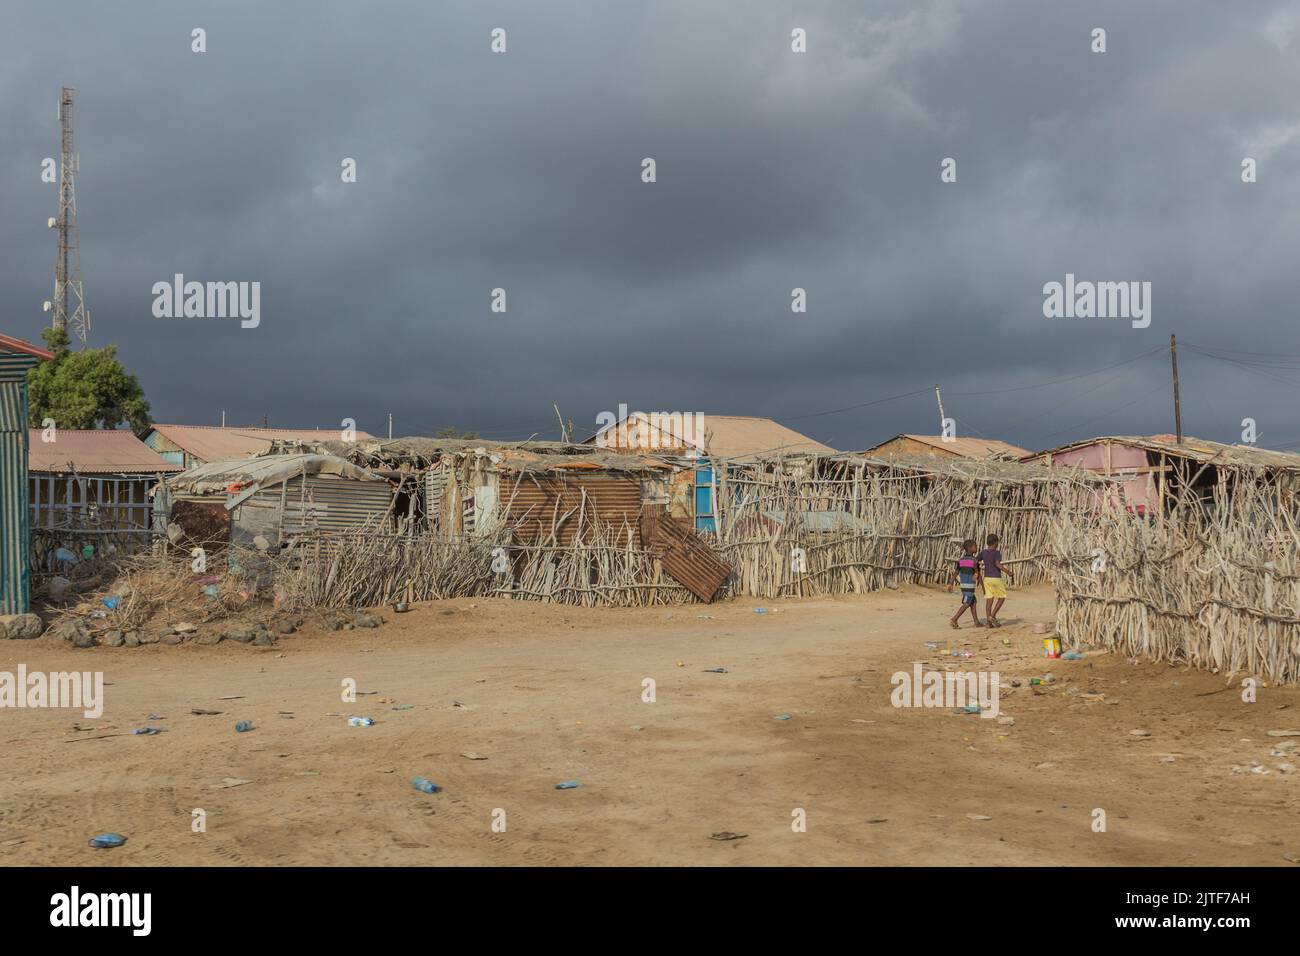 LAWYACADO, SOMALILAND - 17. APRIL 2019: Blick auf die Grenzstadt Lawyacado im westlichen Somaliland Stockfoto